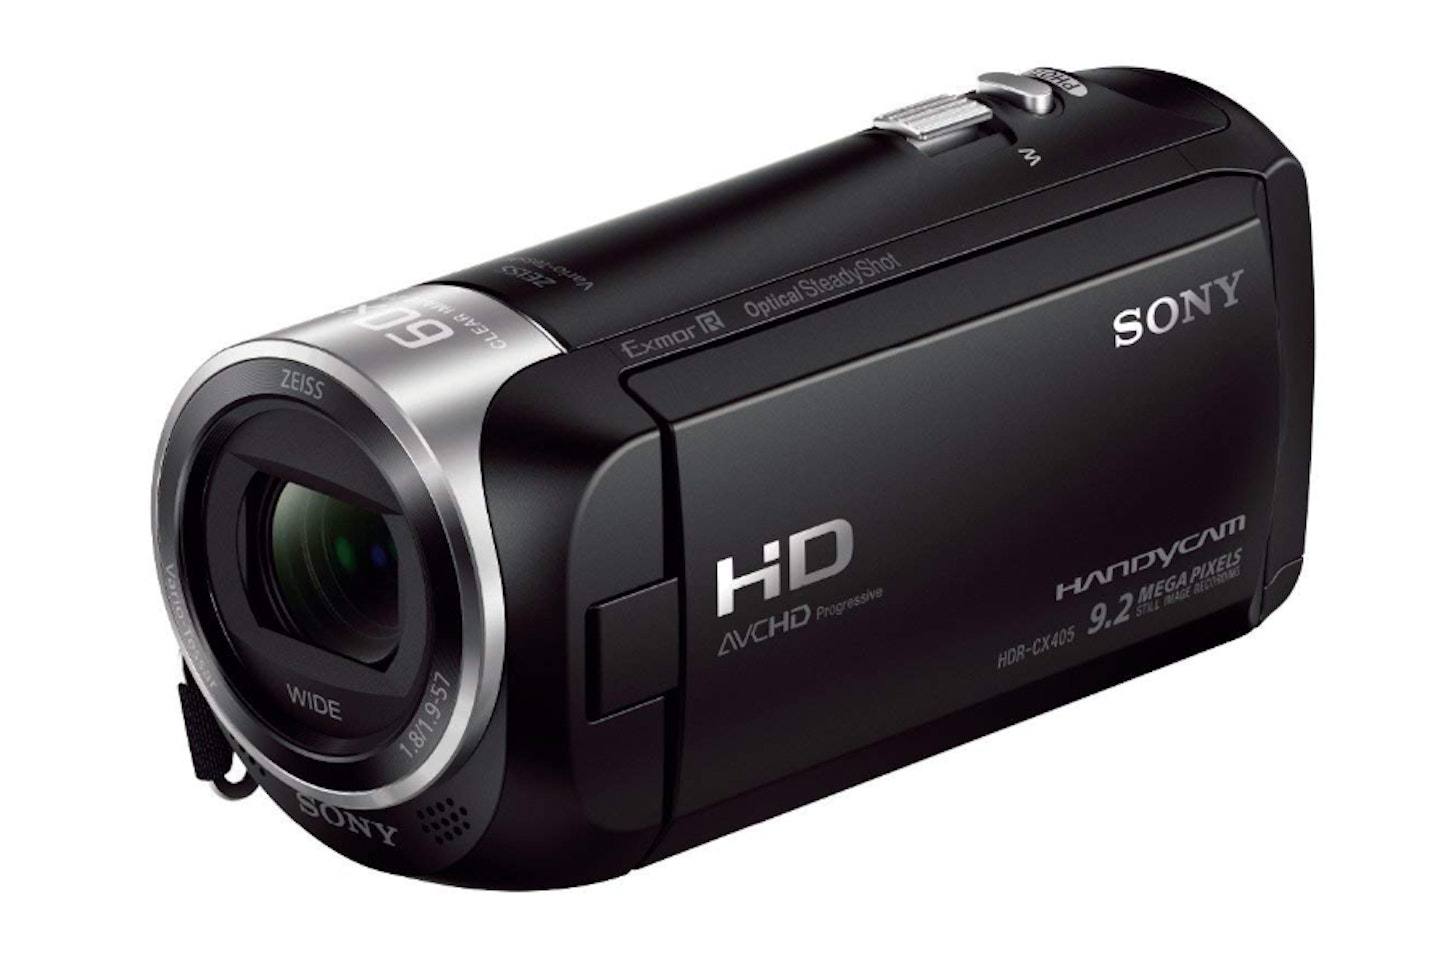 Sony HDR-CX405 9.2 MP Full HD Camcorder (30x Optical Zoom) – Black